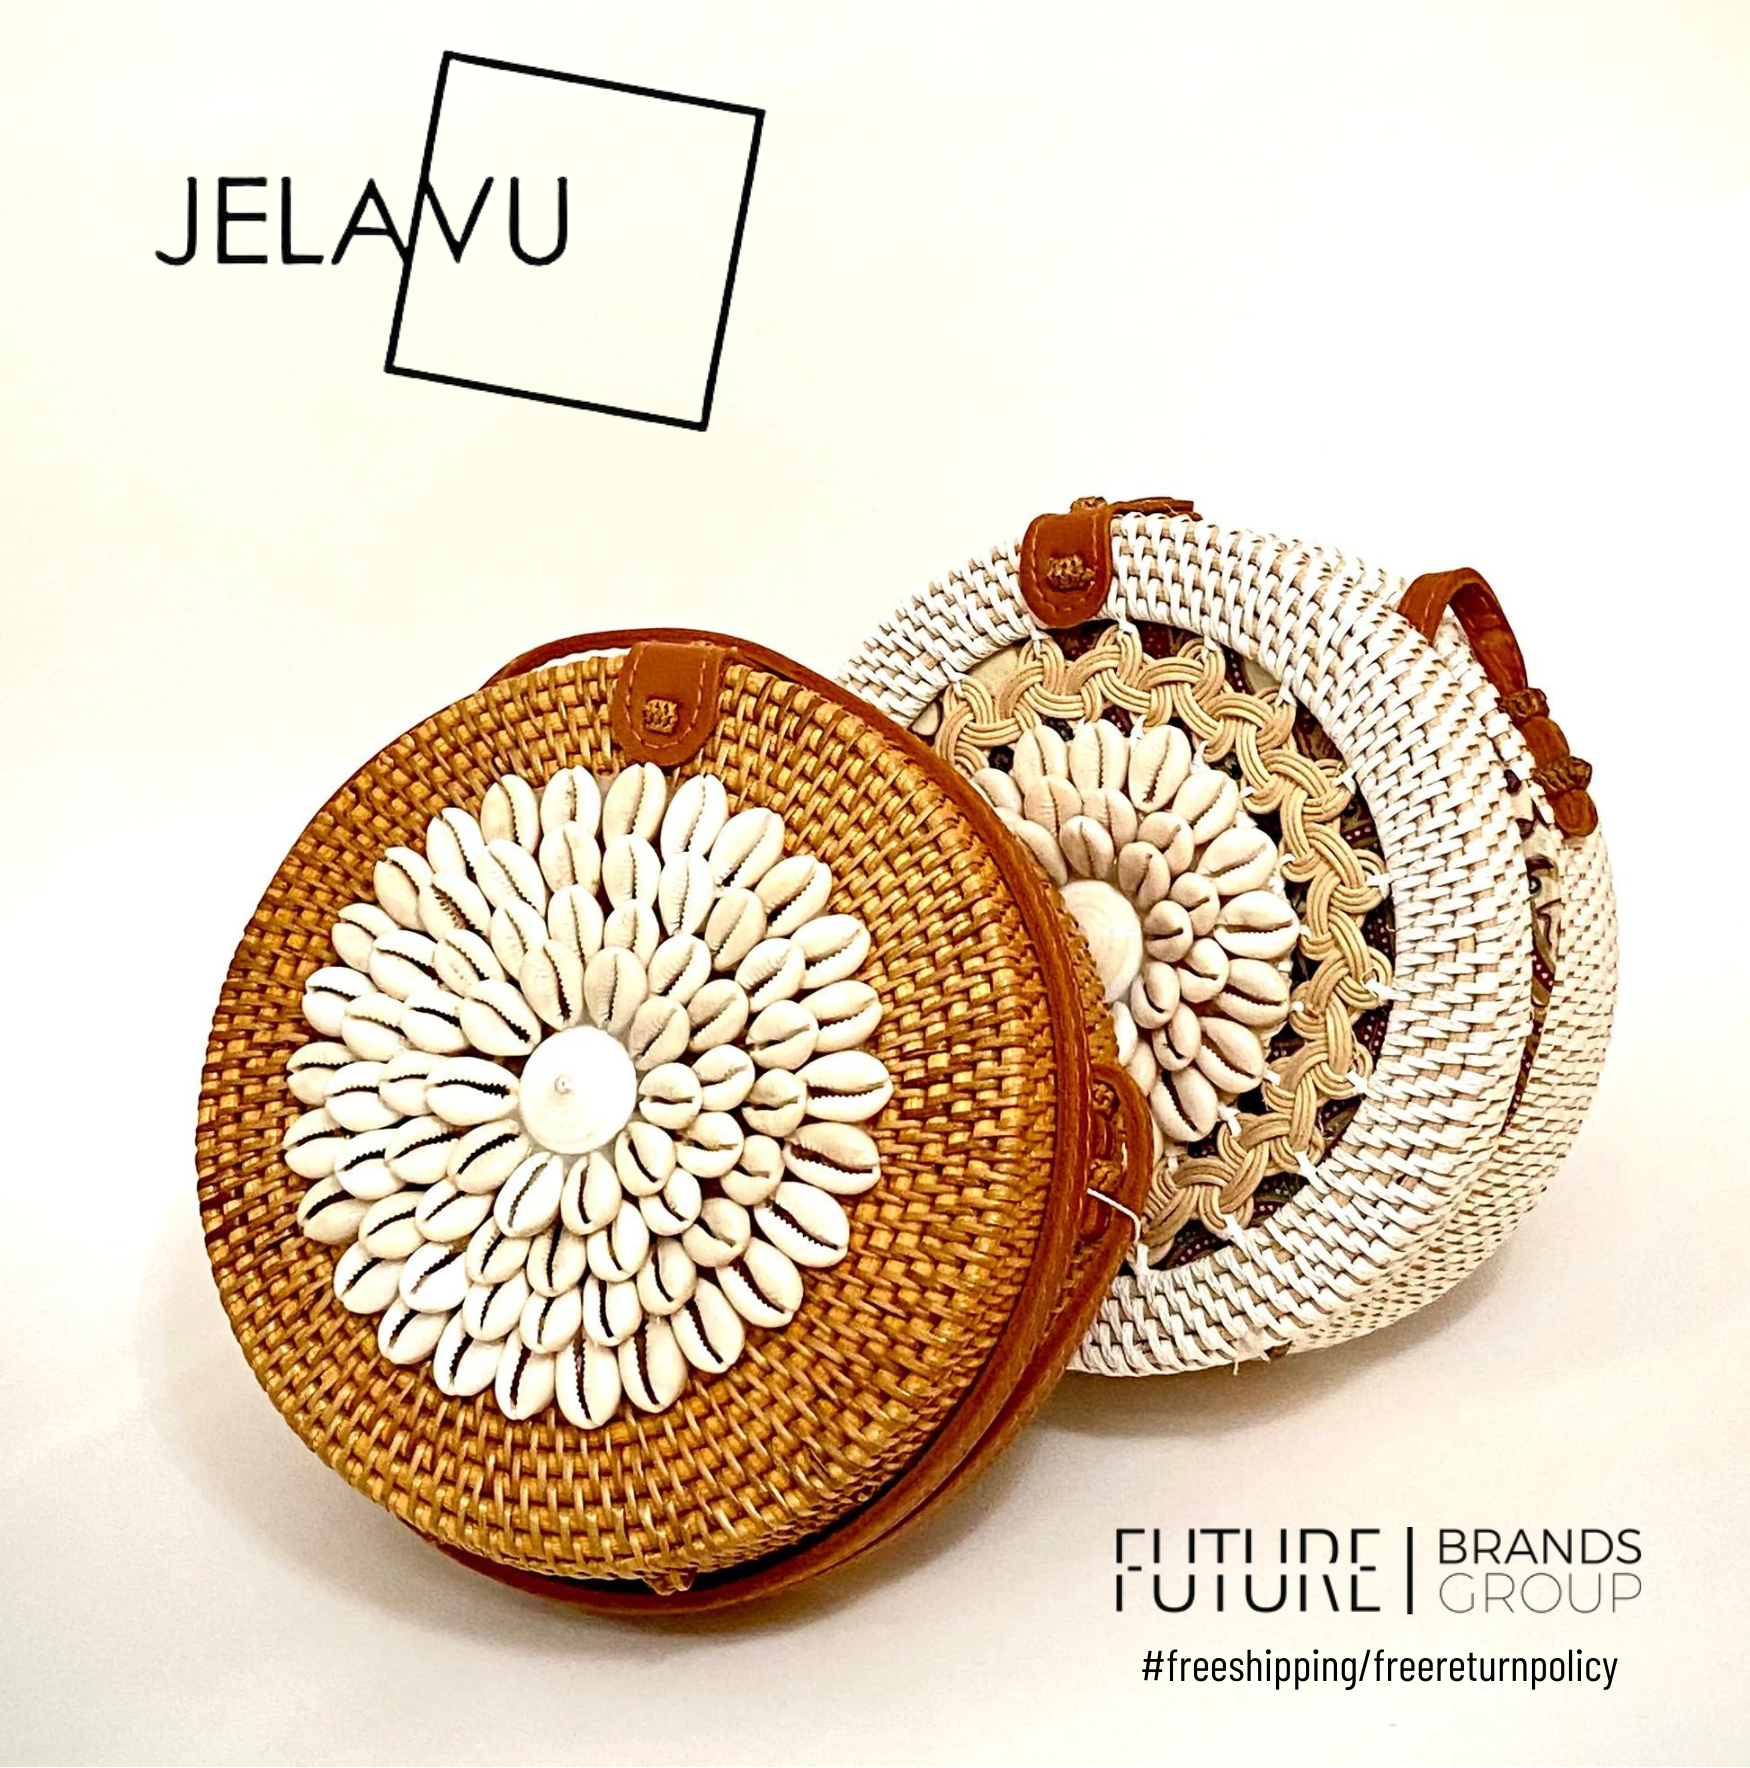 Ata Kauri | Vegan Handbags | Jelavu | Future Brands Group